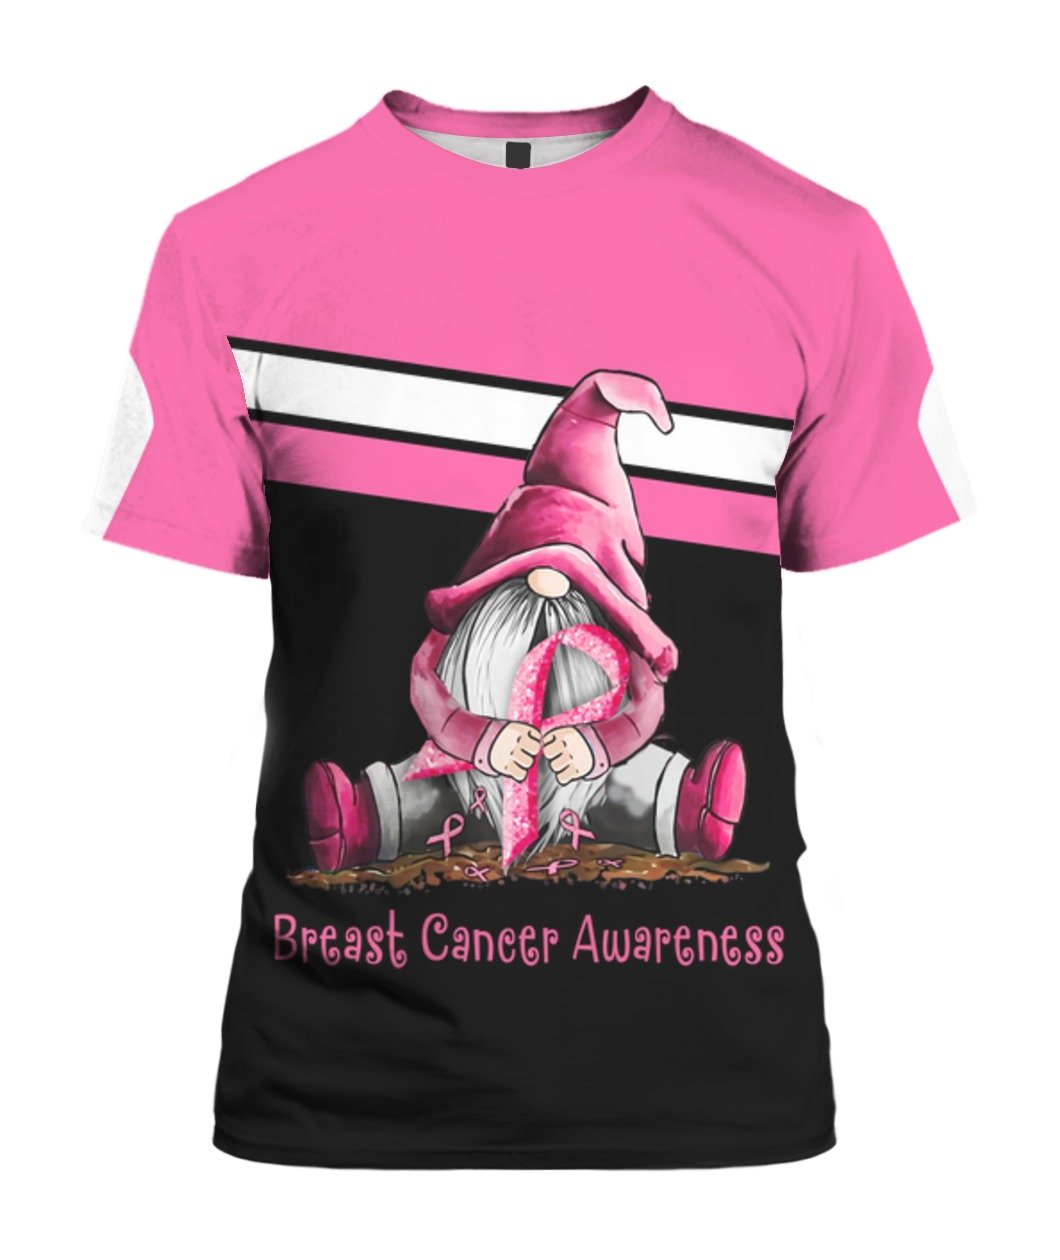 Gnome breast cancer awareness full printing tshirt